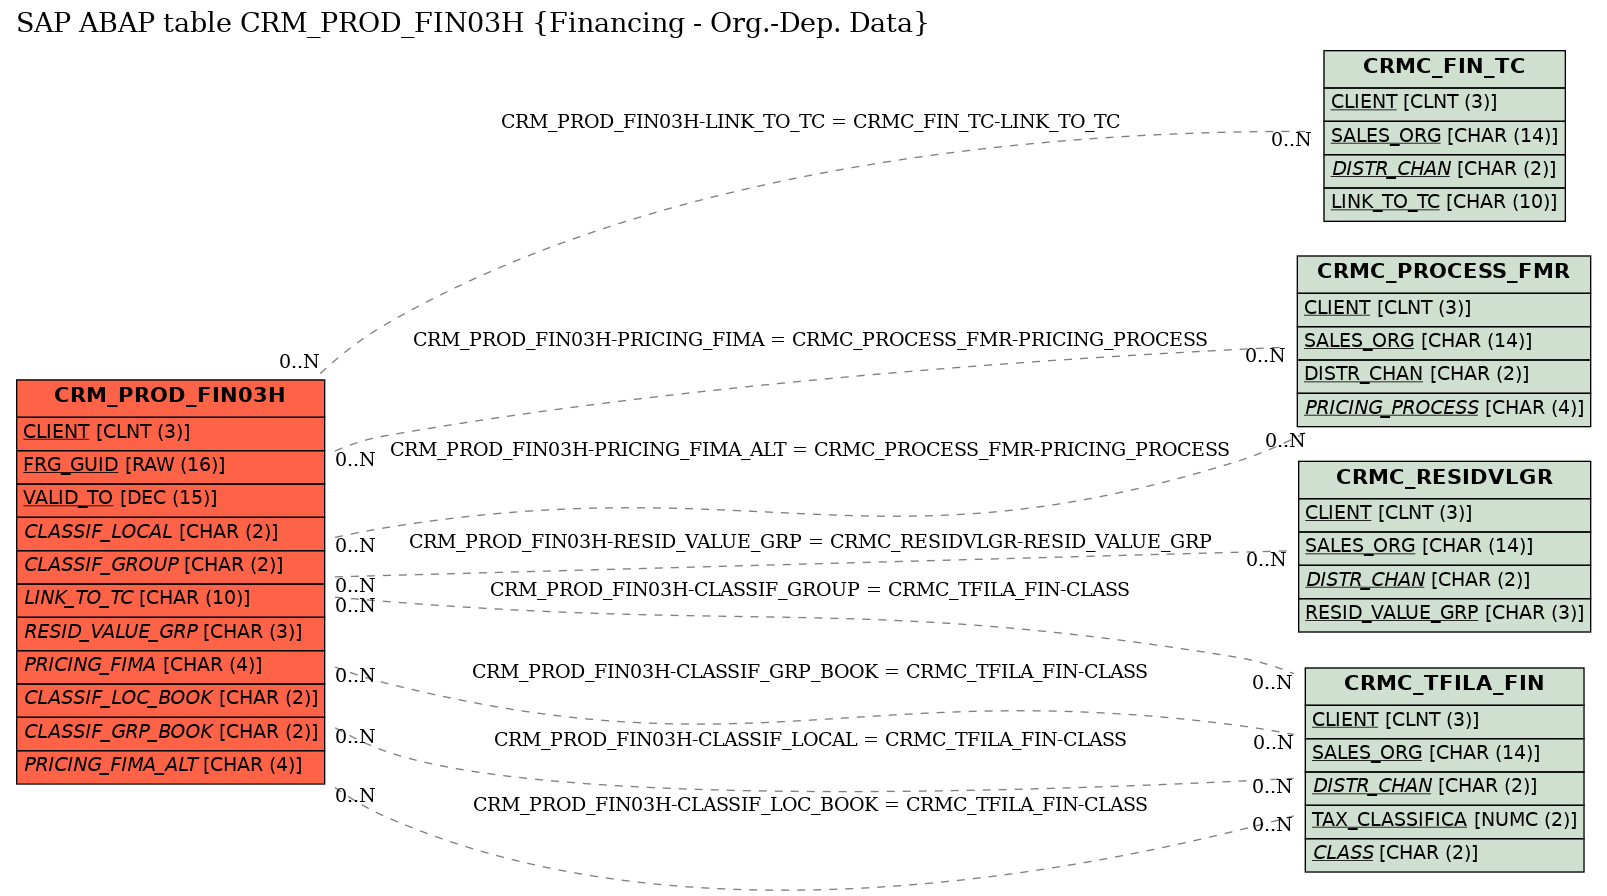 E-R Diagram for table CRM_PROD_FIN03H (Financing - Org.-Dep. Data)